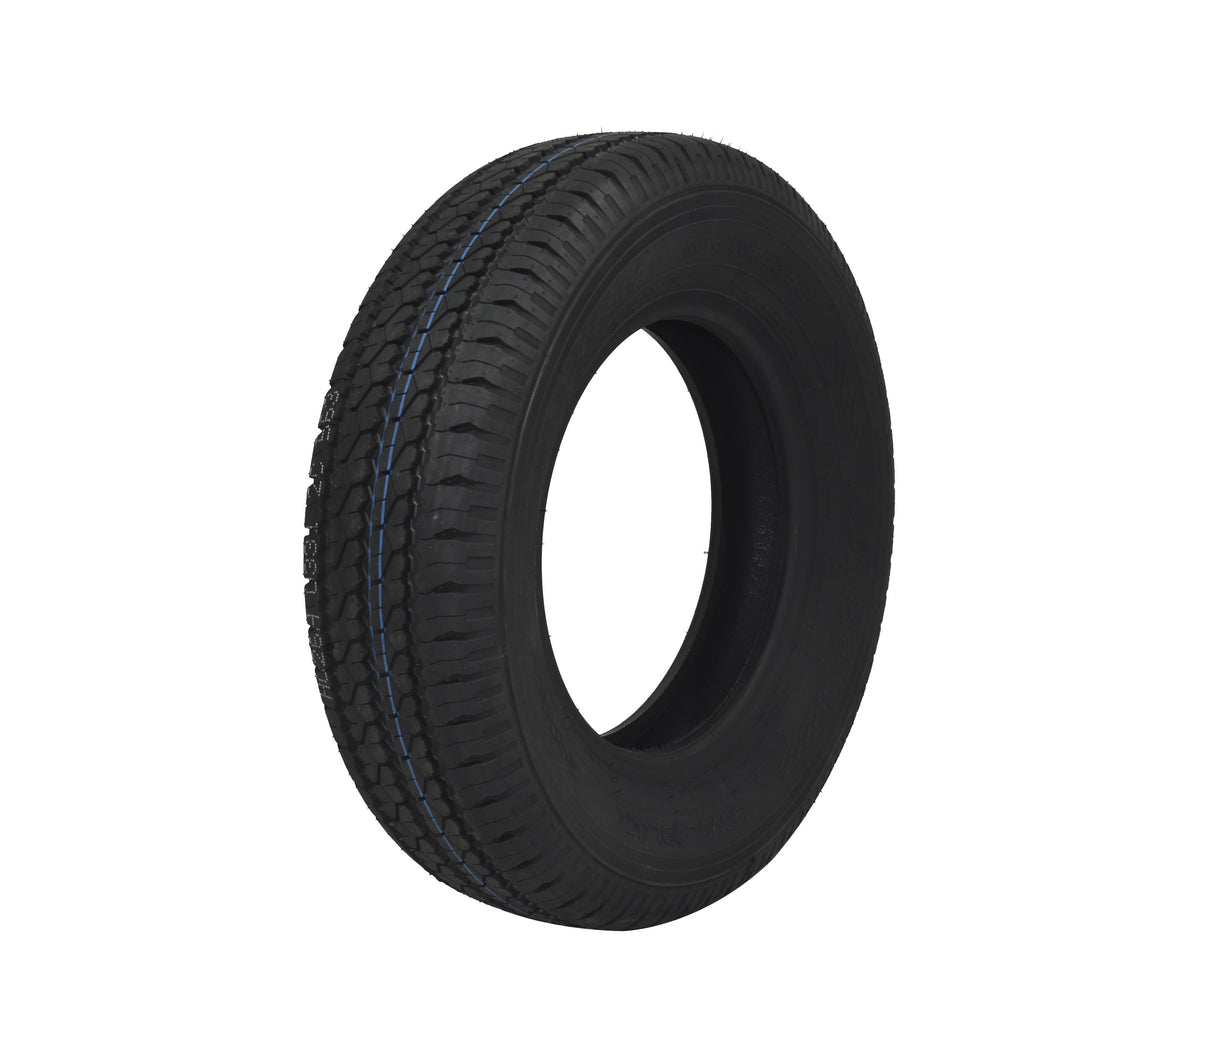 Neumático commercial 195R15C 106/104R  Royal Black